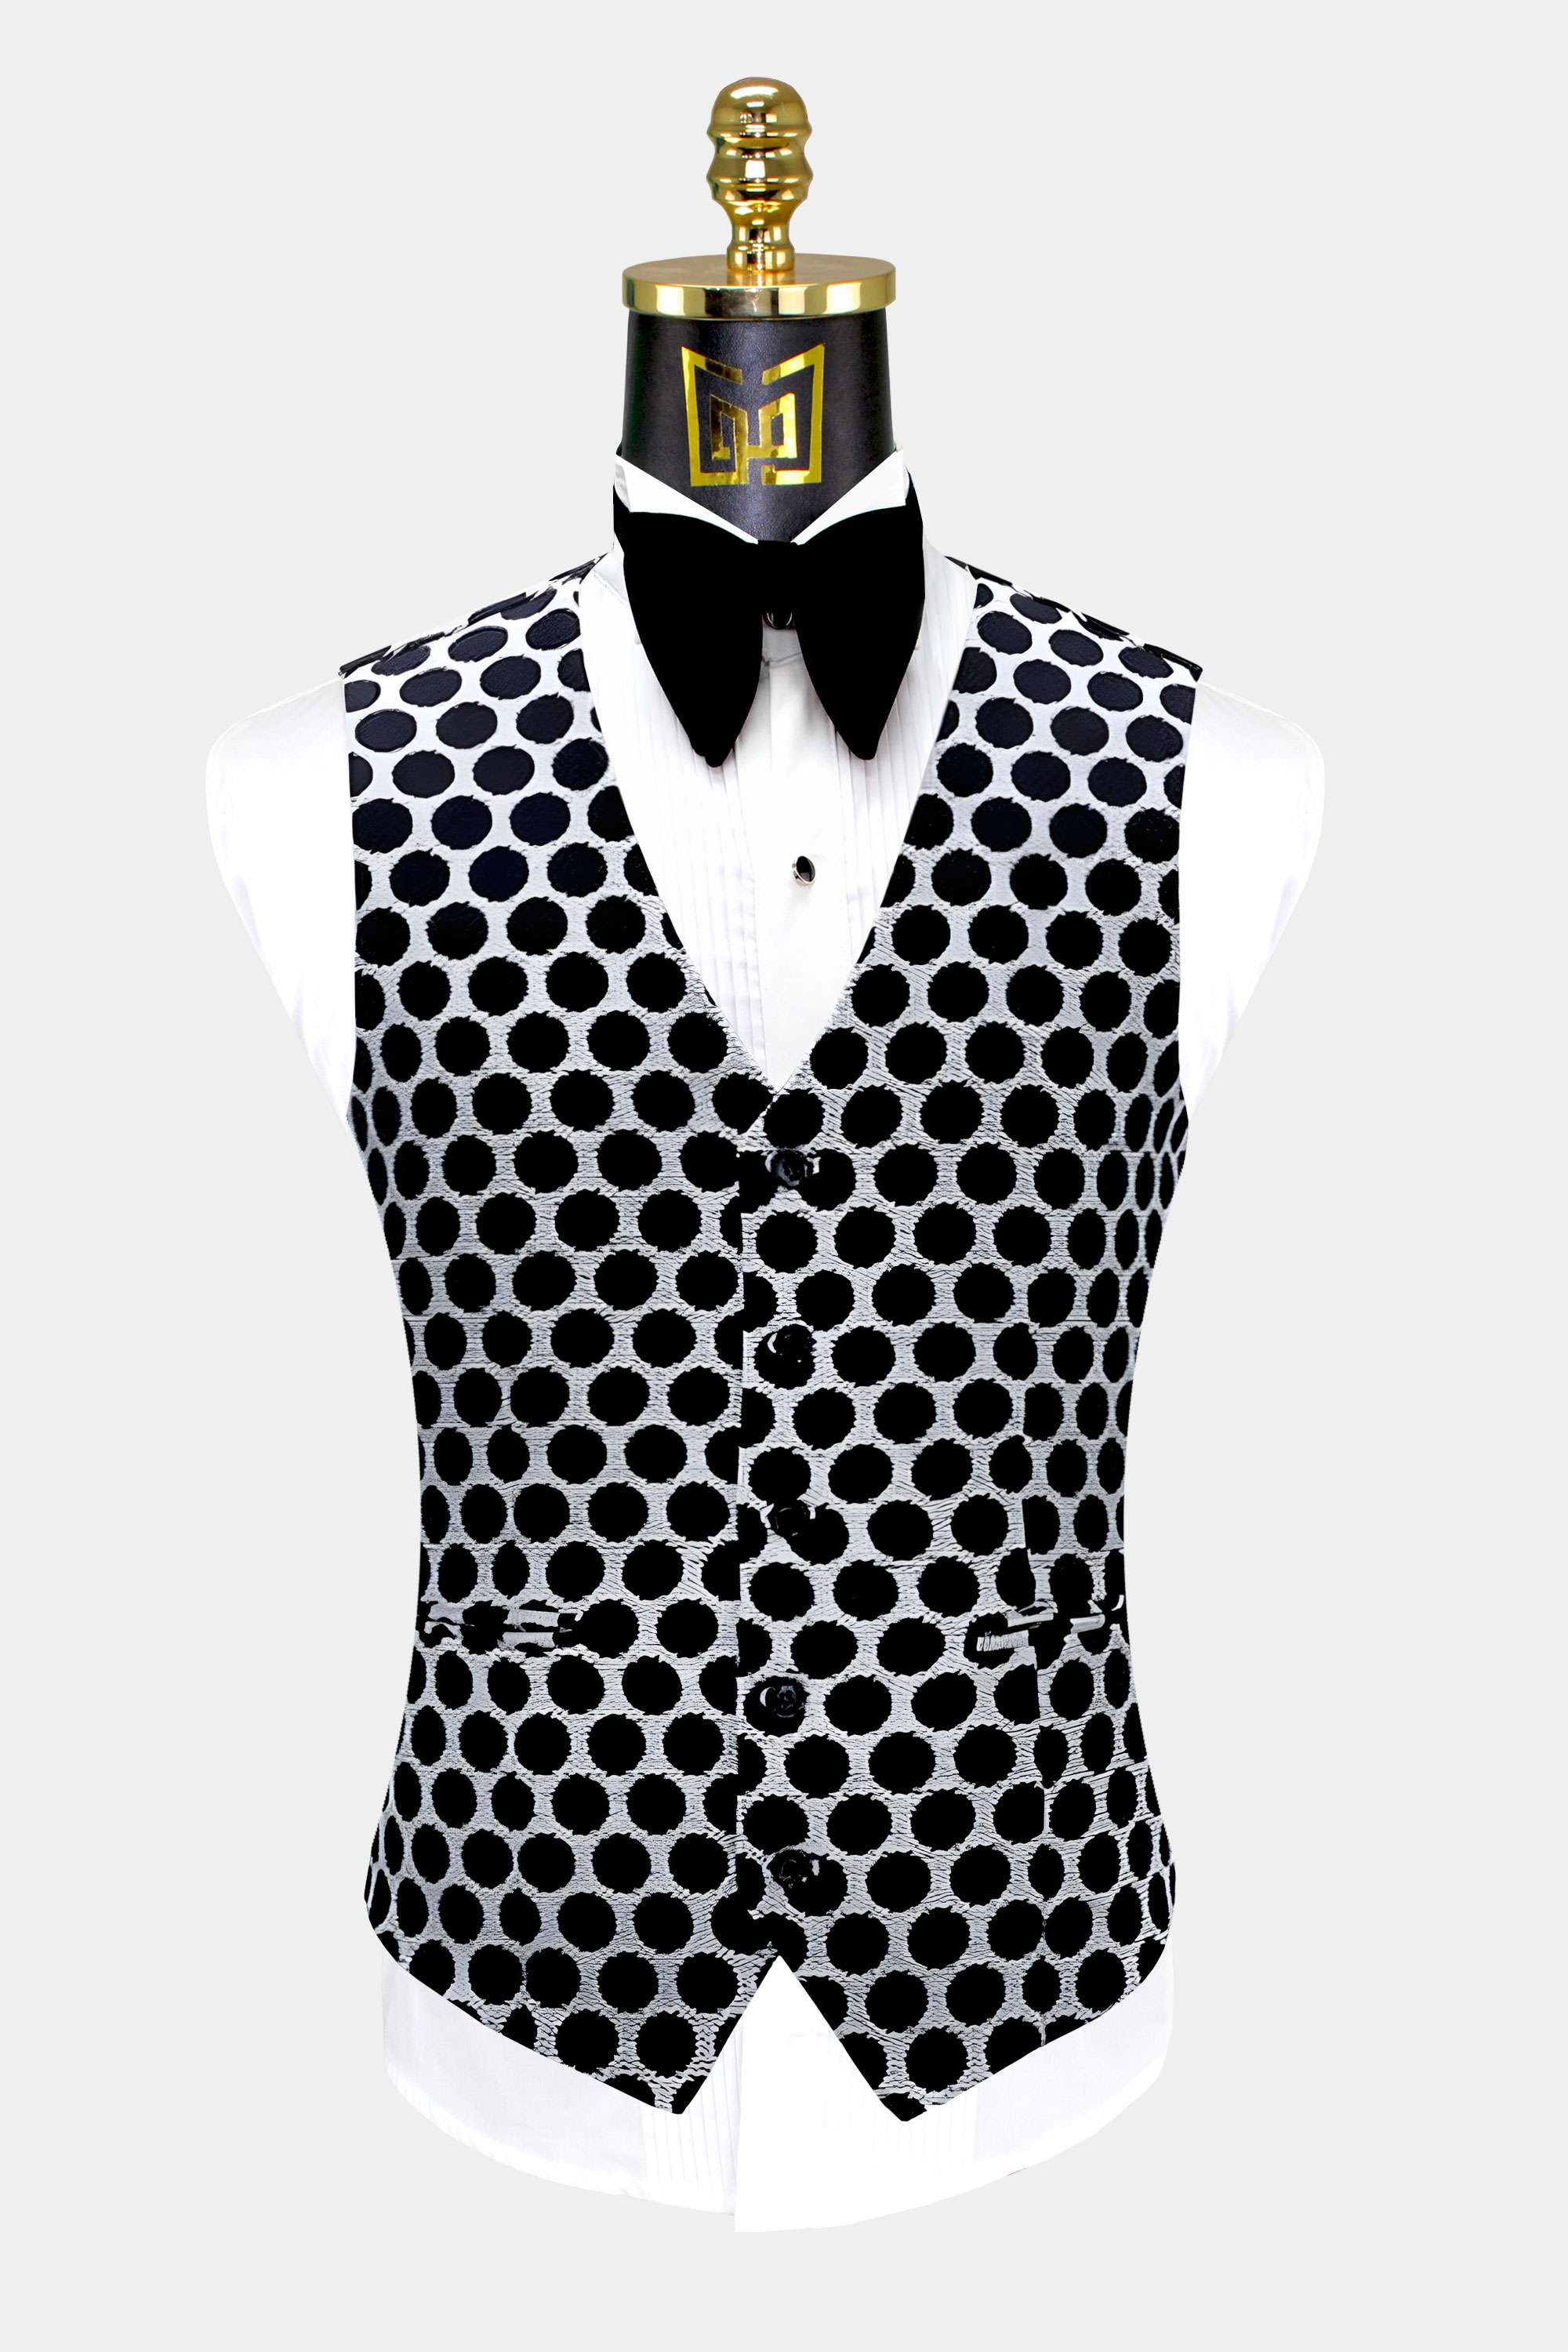 Black-and-White-Polka-Dot-Suit-Vest-from-Gentlemansguru.com